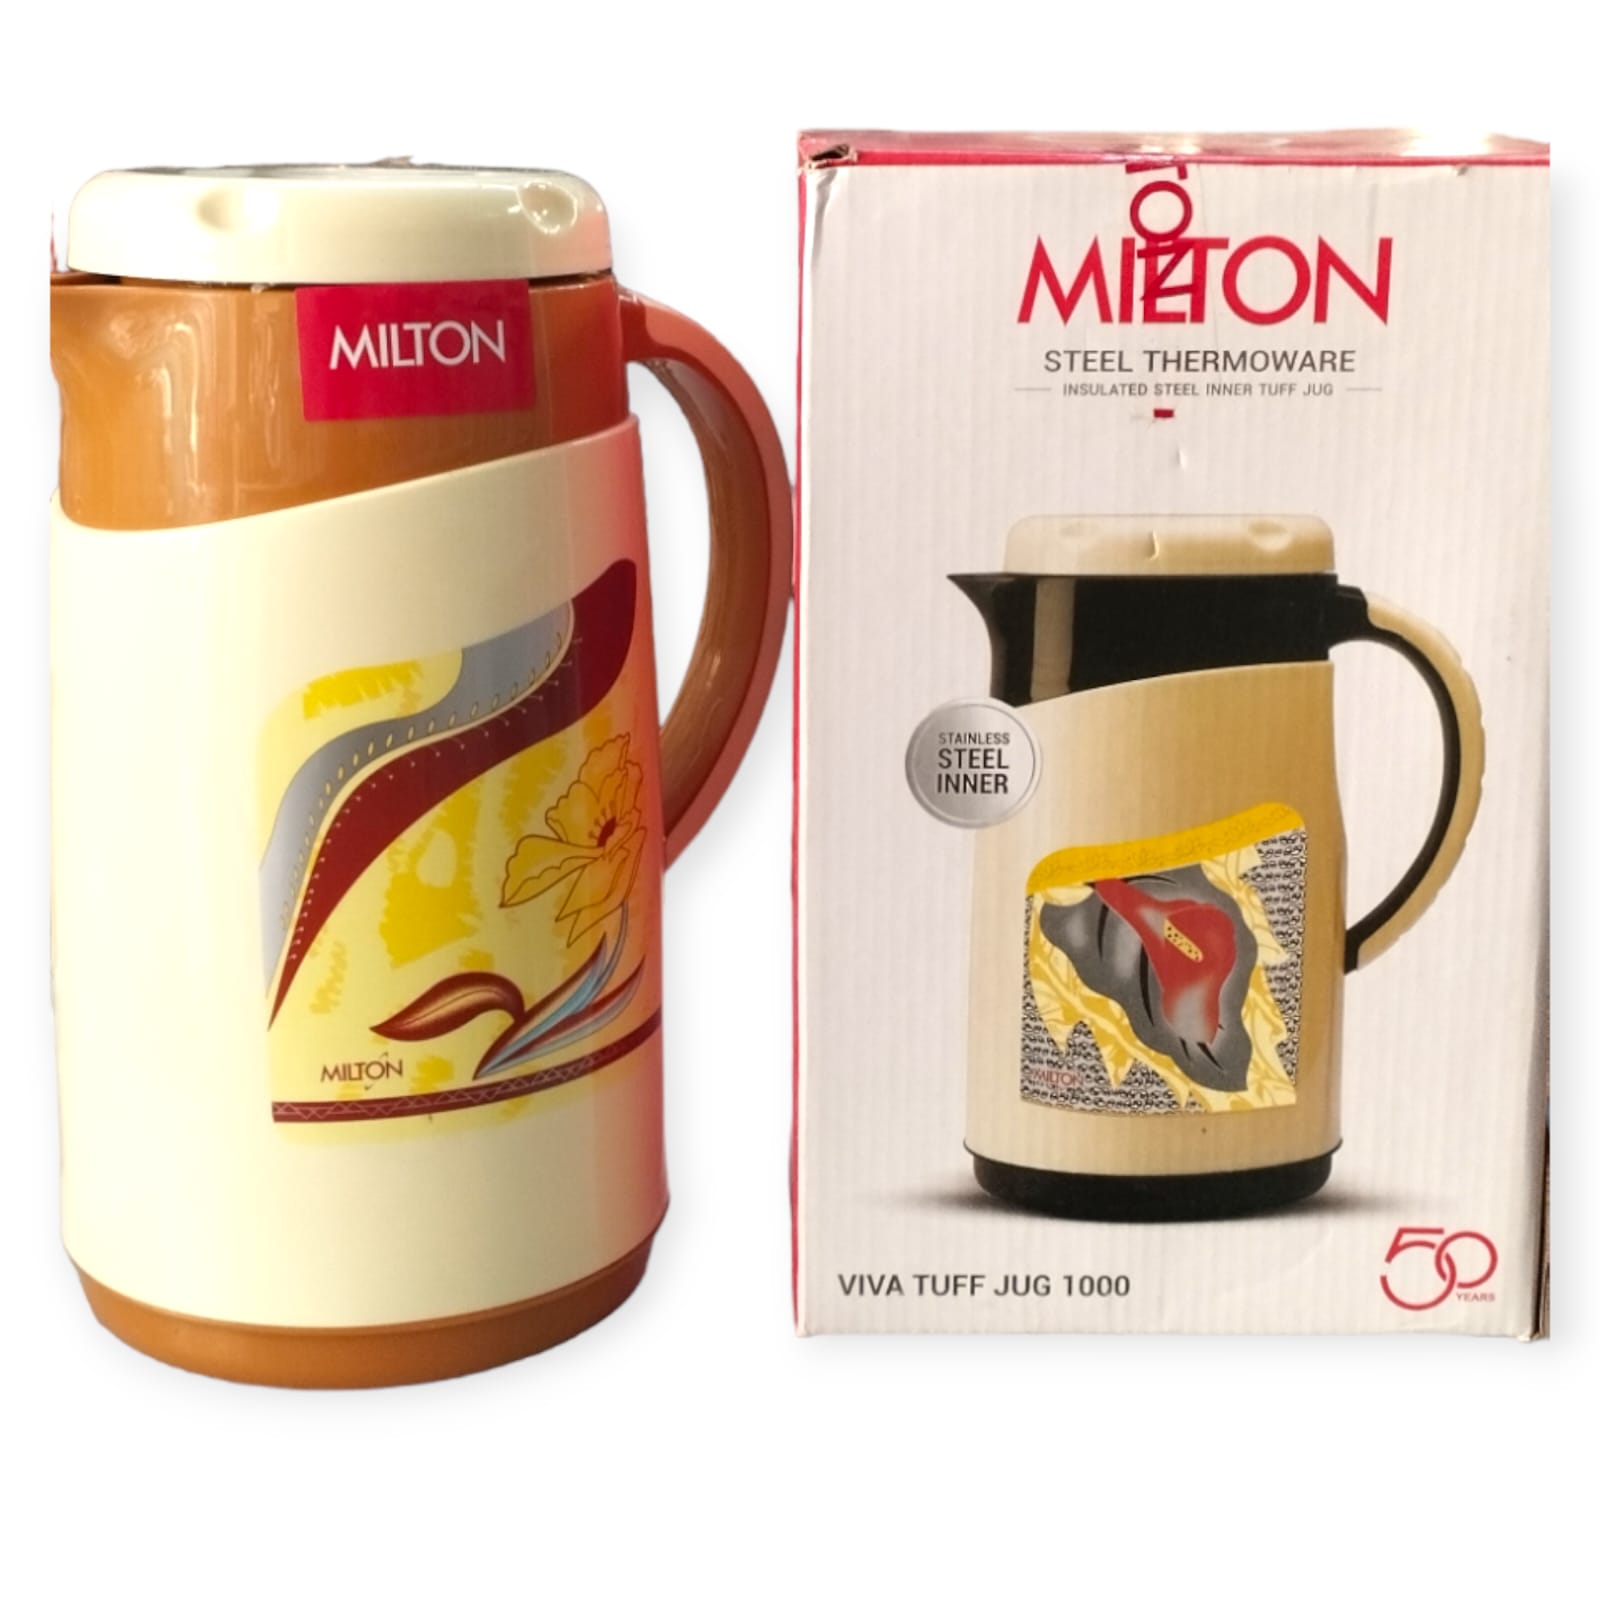 Milton steel thermoware  tuff jug 